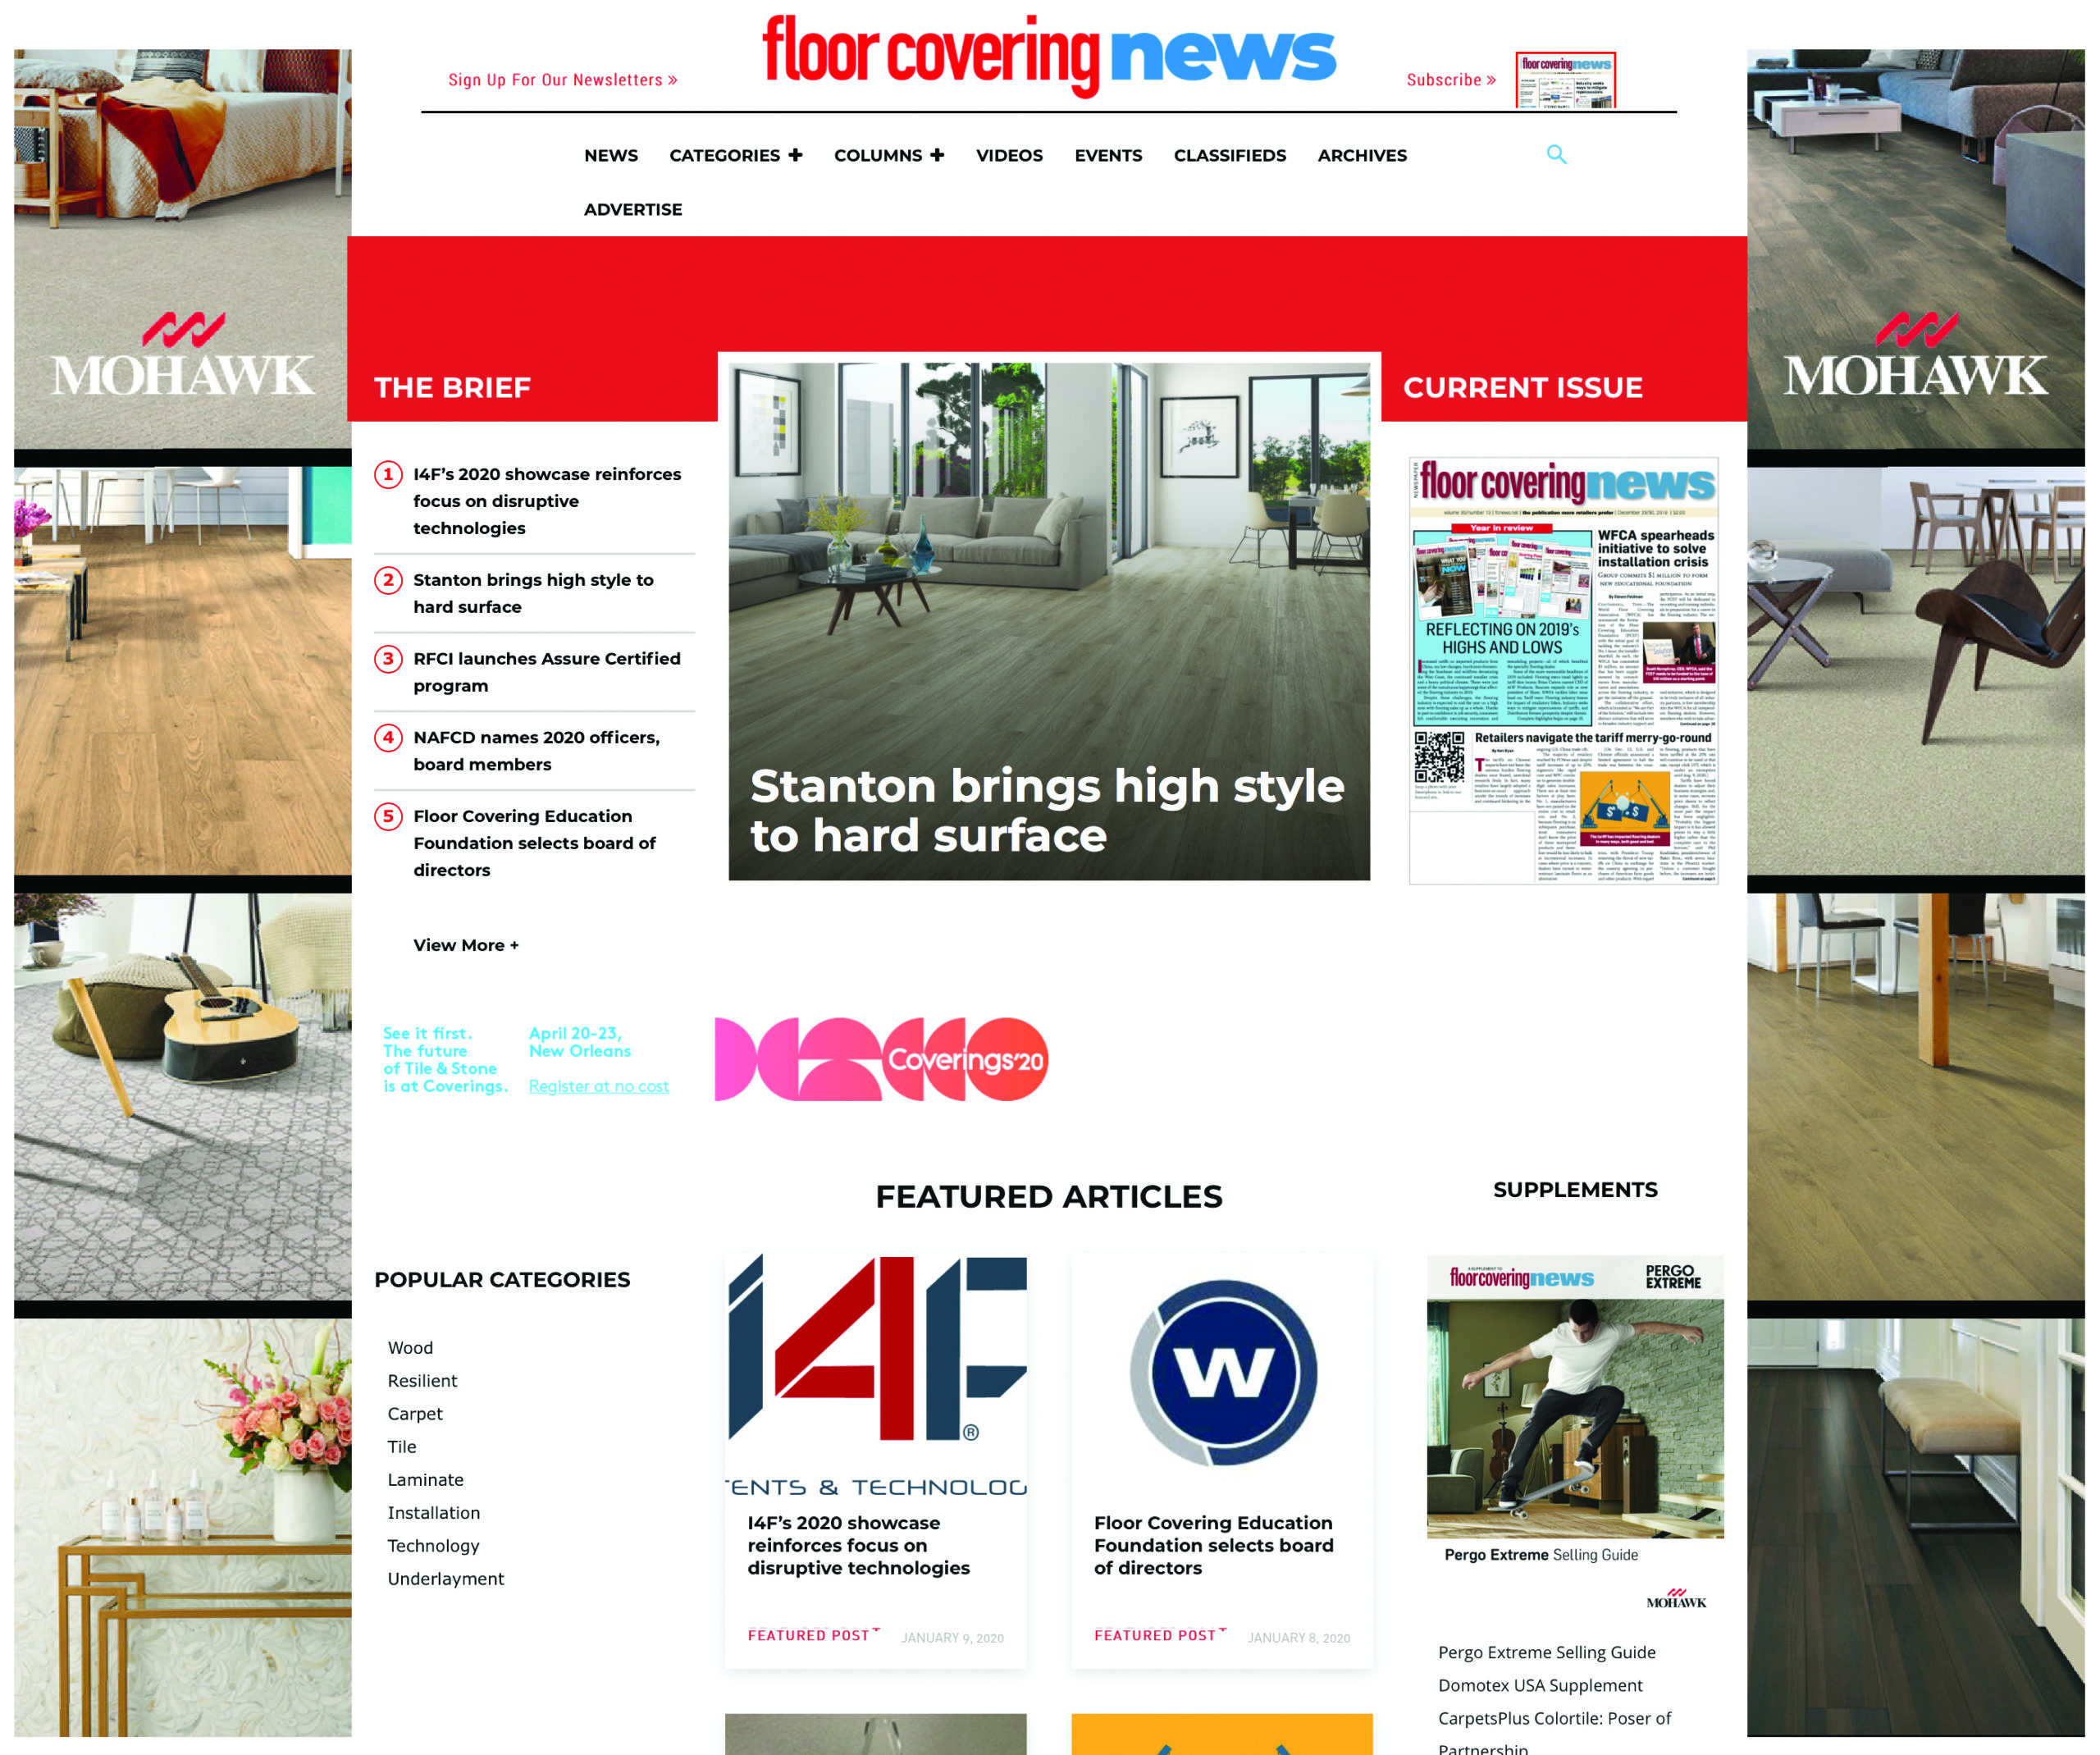 New FCNews site, streamlining user experience